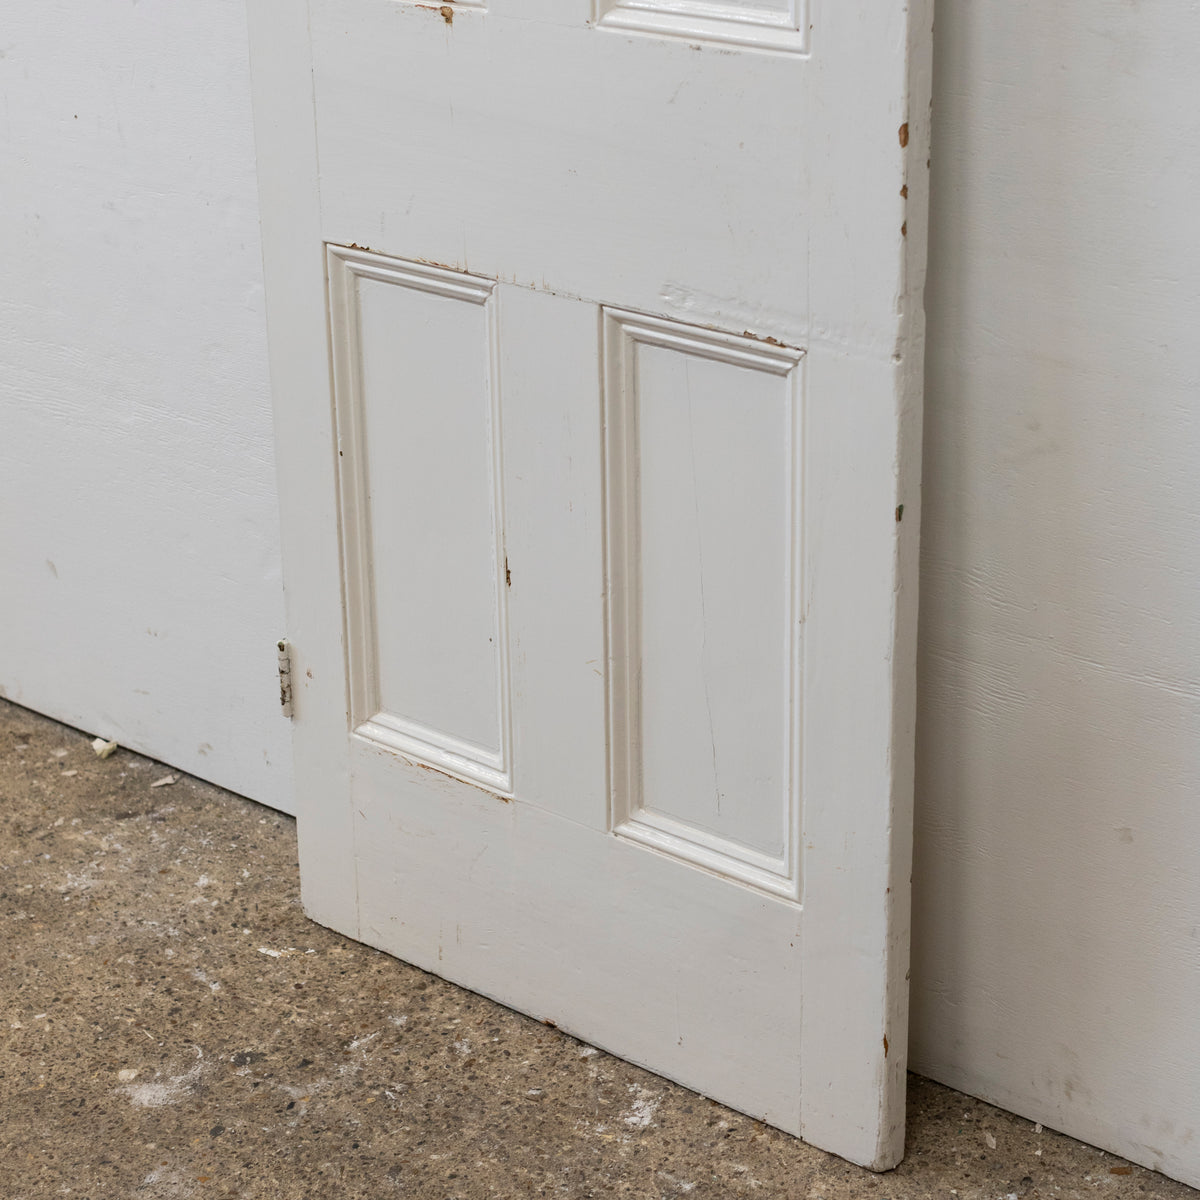 Reclaimed 4 Panel Door 196.5cm x 70.5cm | The Architectural Forum